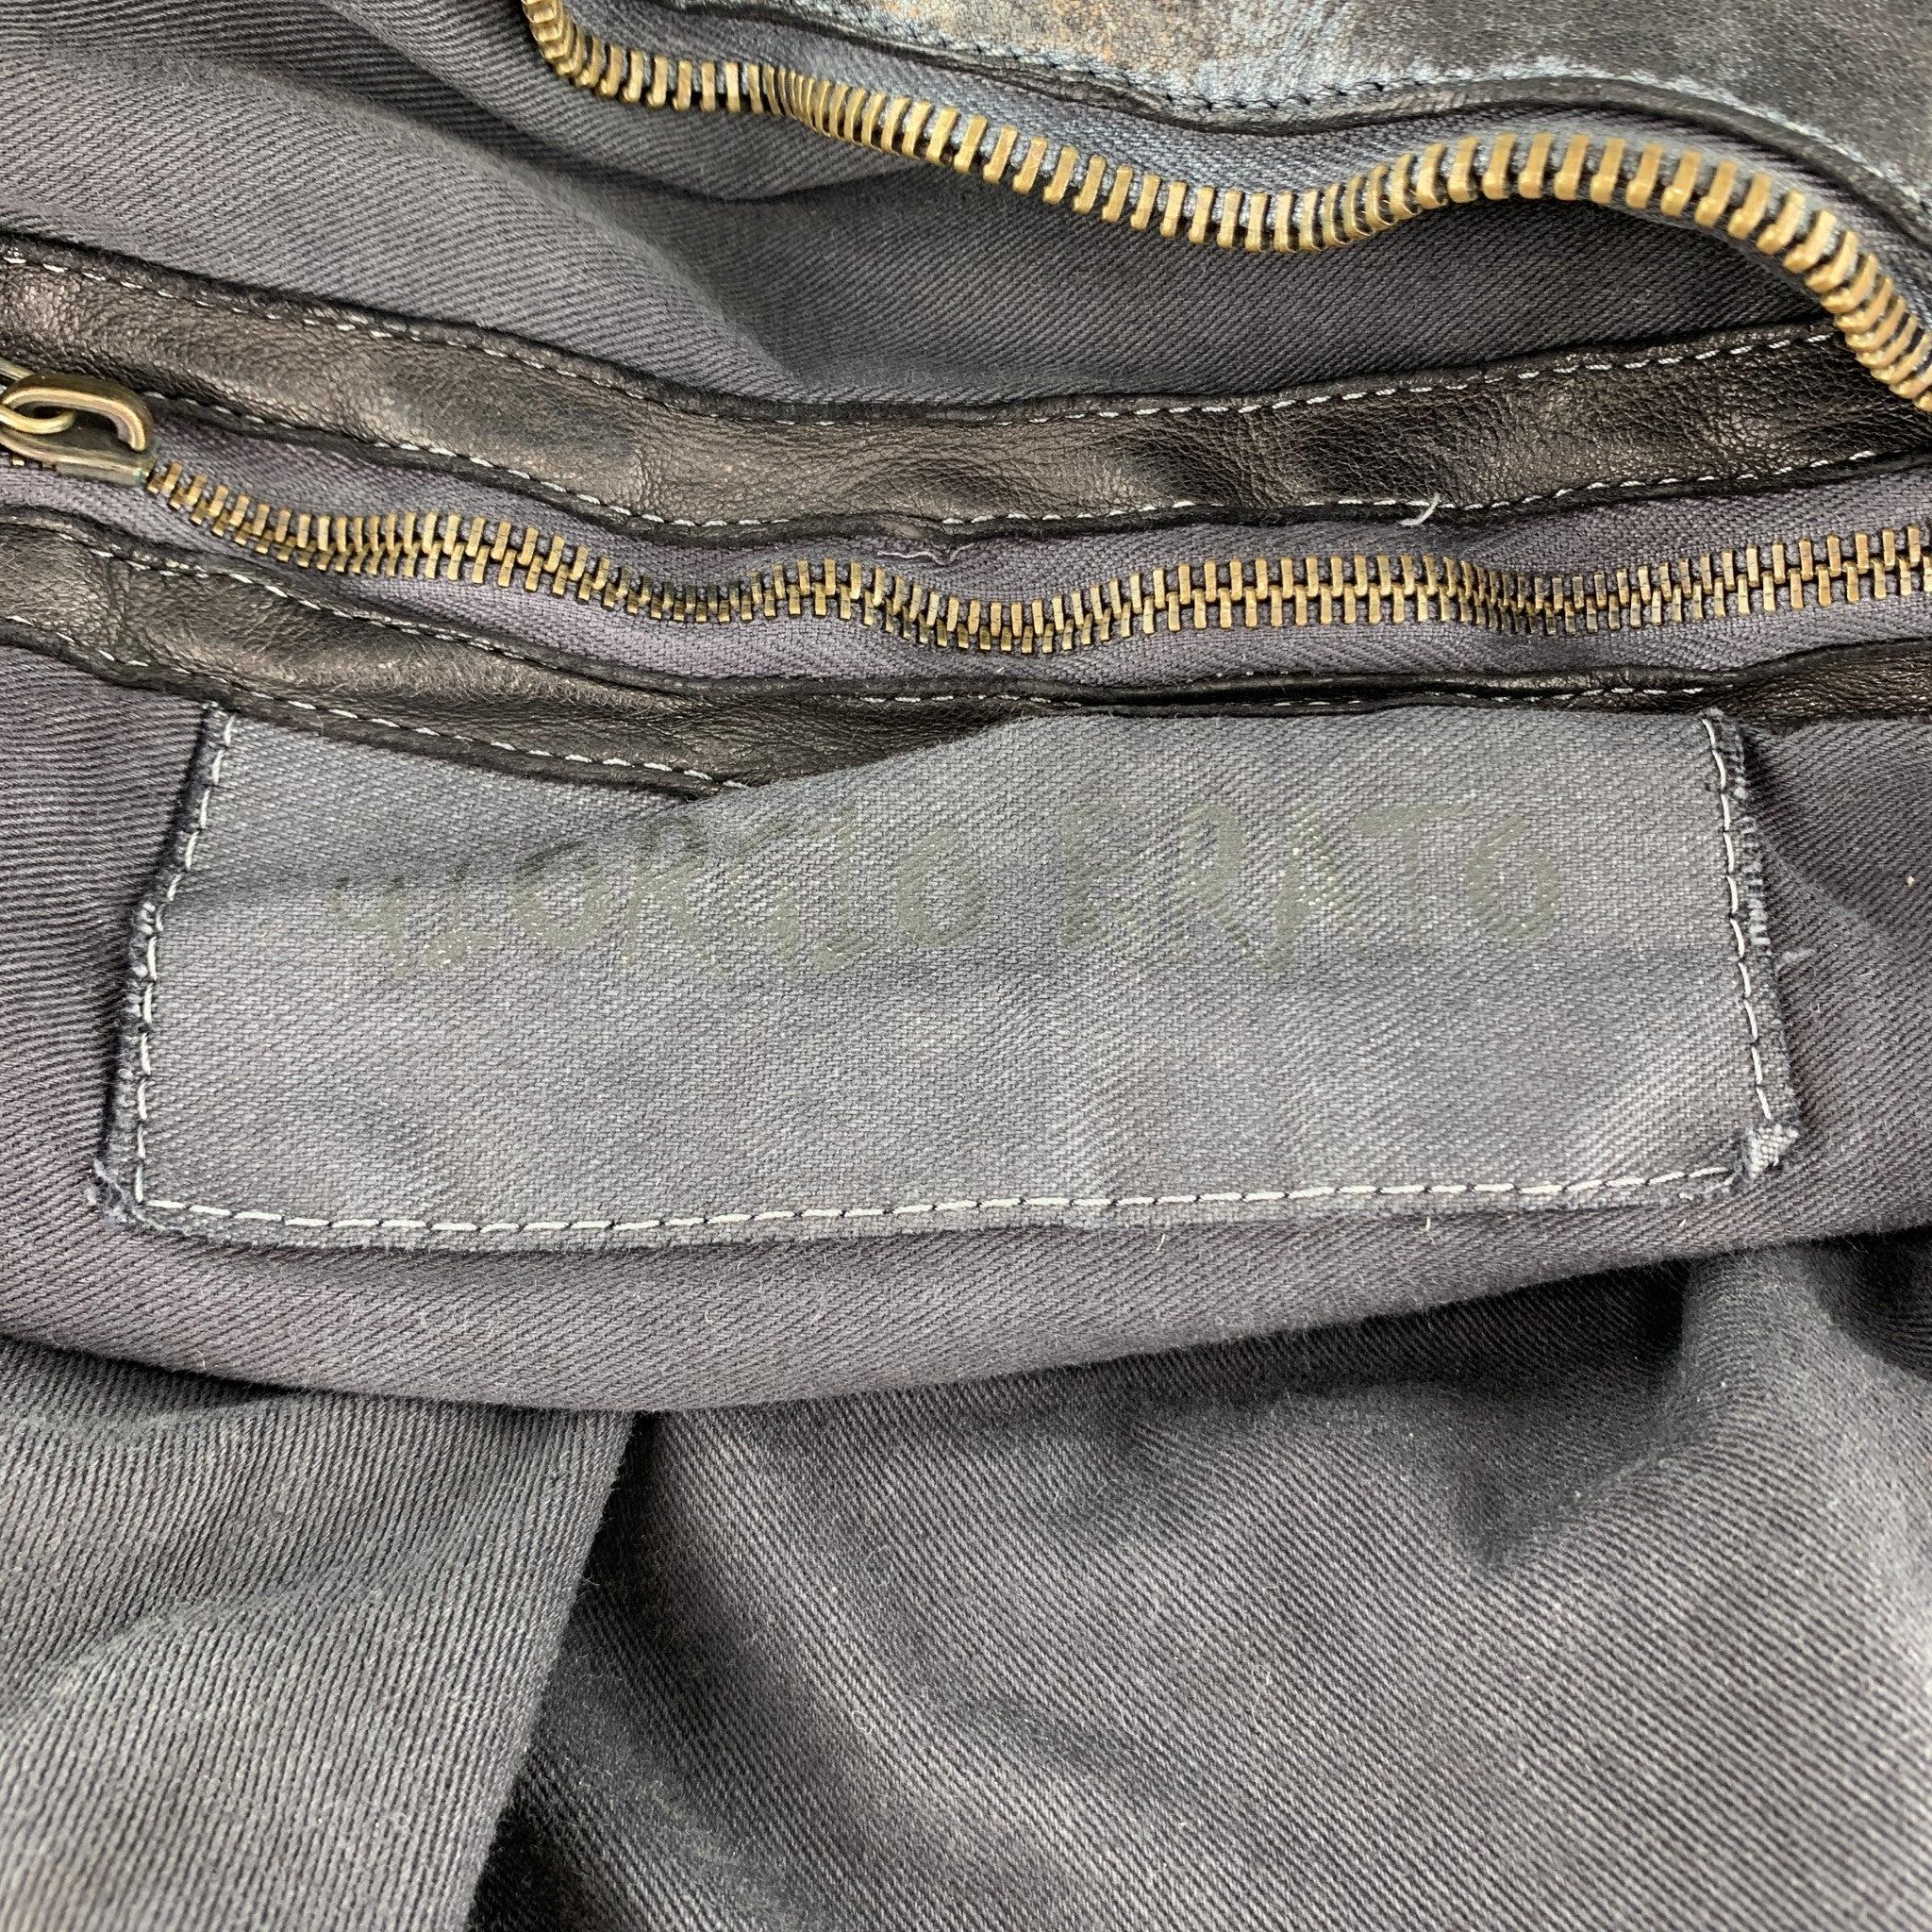 GIORGIO BRATO Distressed Gunmetal Metallic Leather Satchel Handbag 4